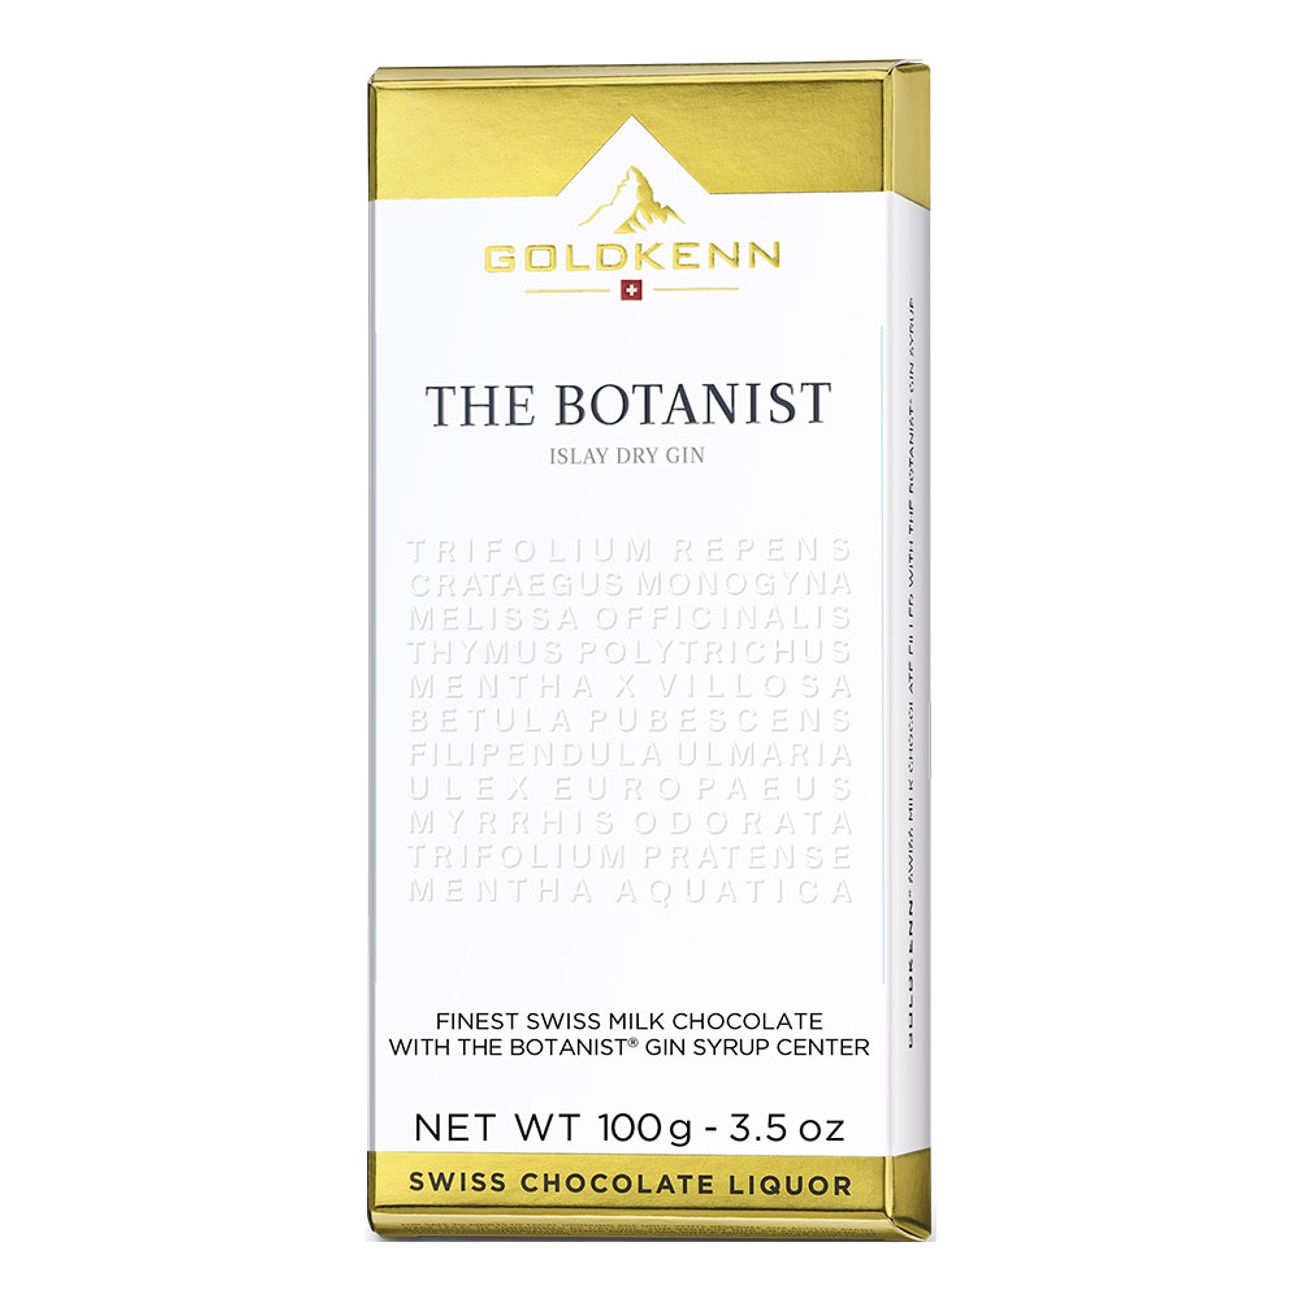 goldkenn-the-botanist-islay-dry-gin-chokladkaka-79786-1